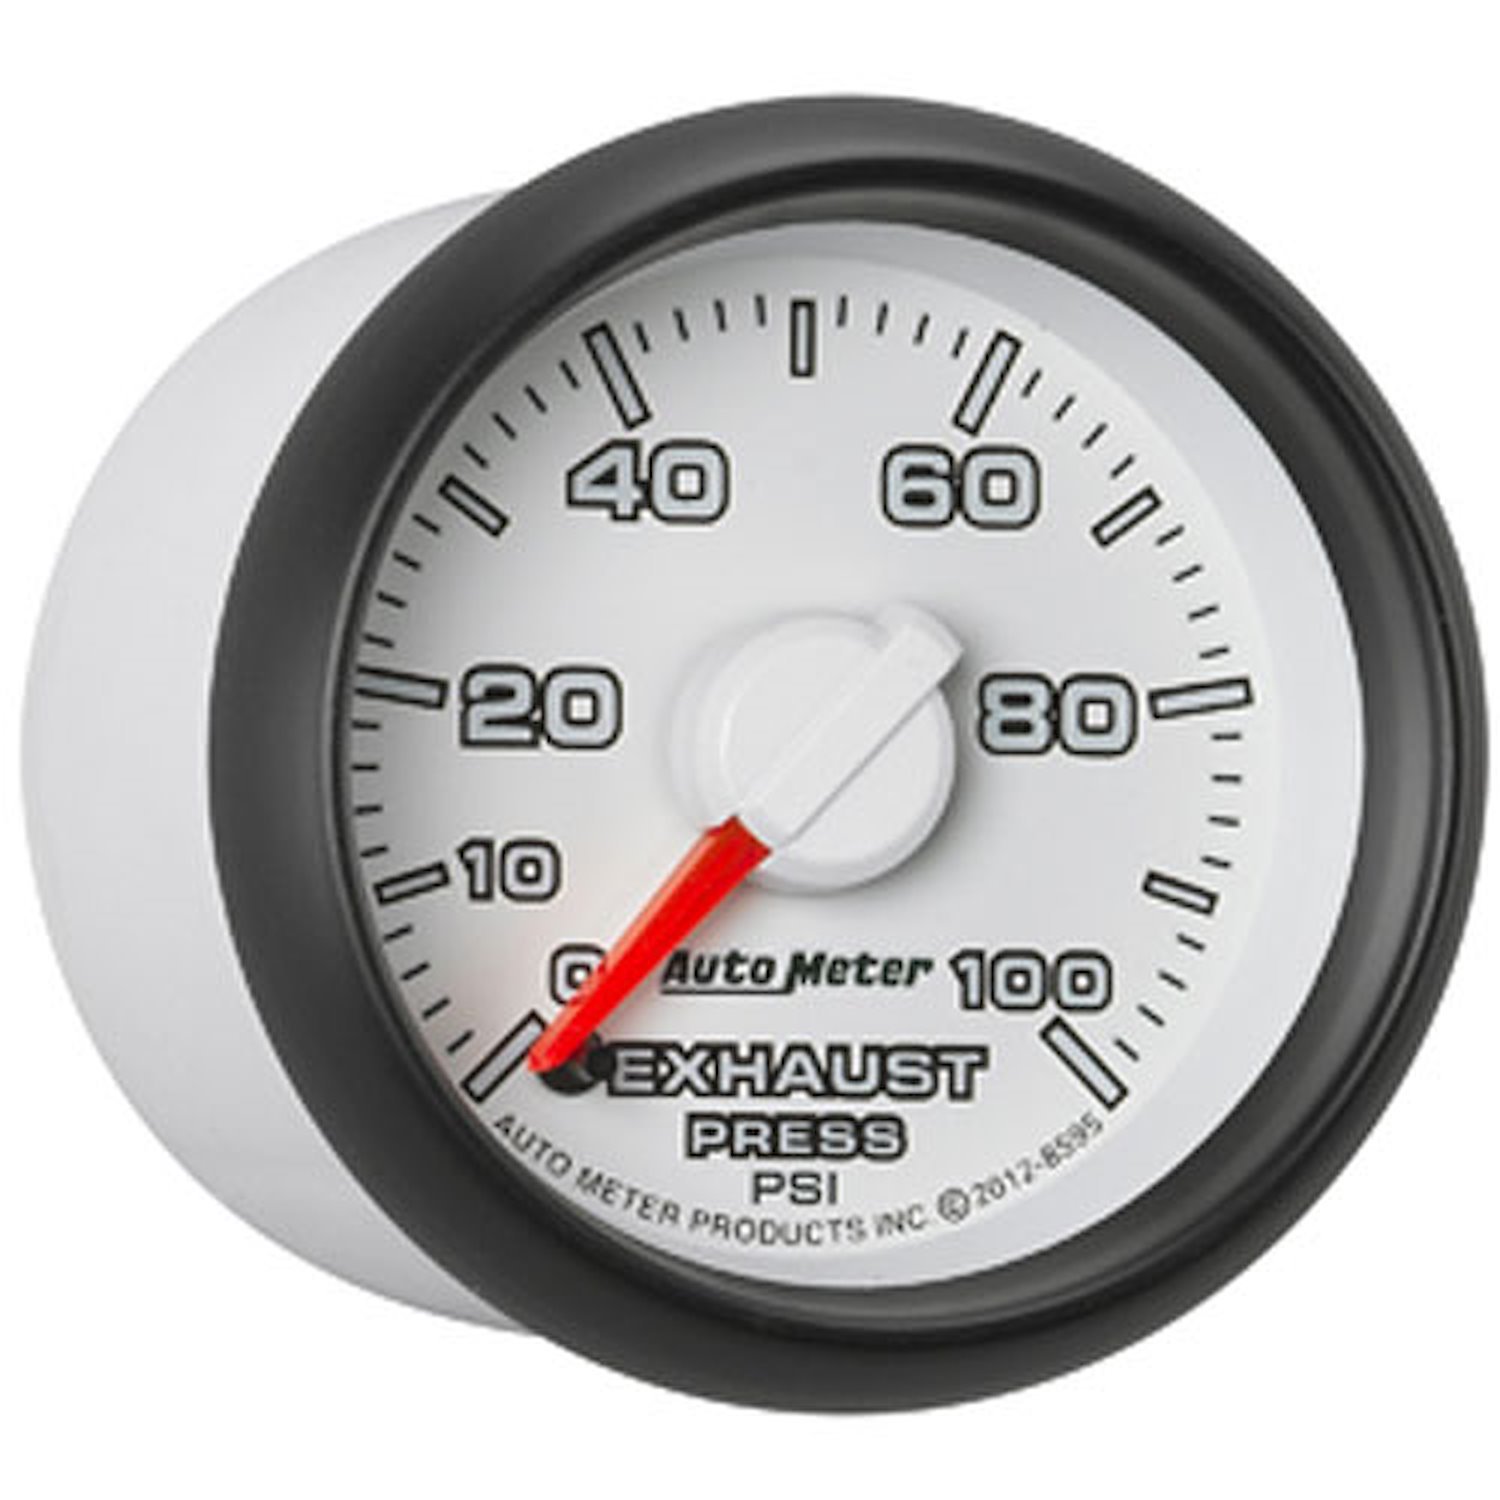 Gen 3 Dodge Factory Match Exhaust (Drive) Pressure Gauge 2-1/16" Electrical